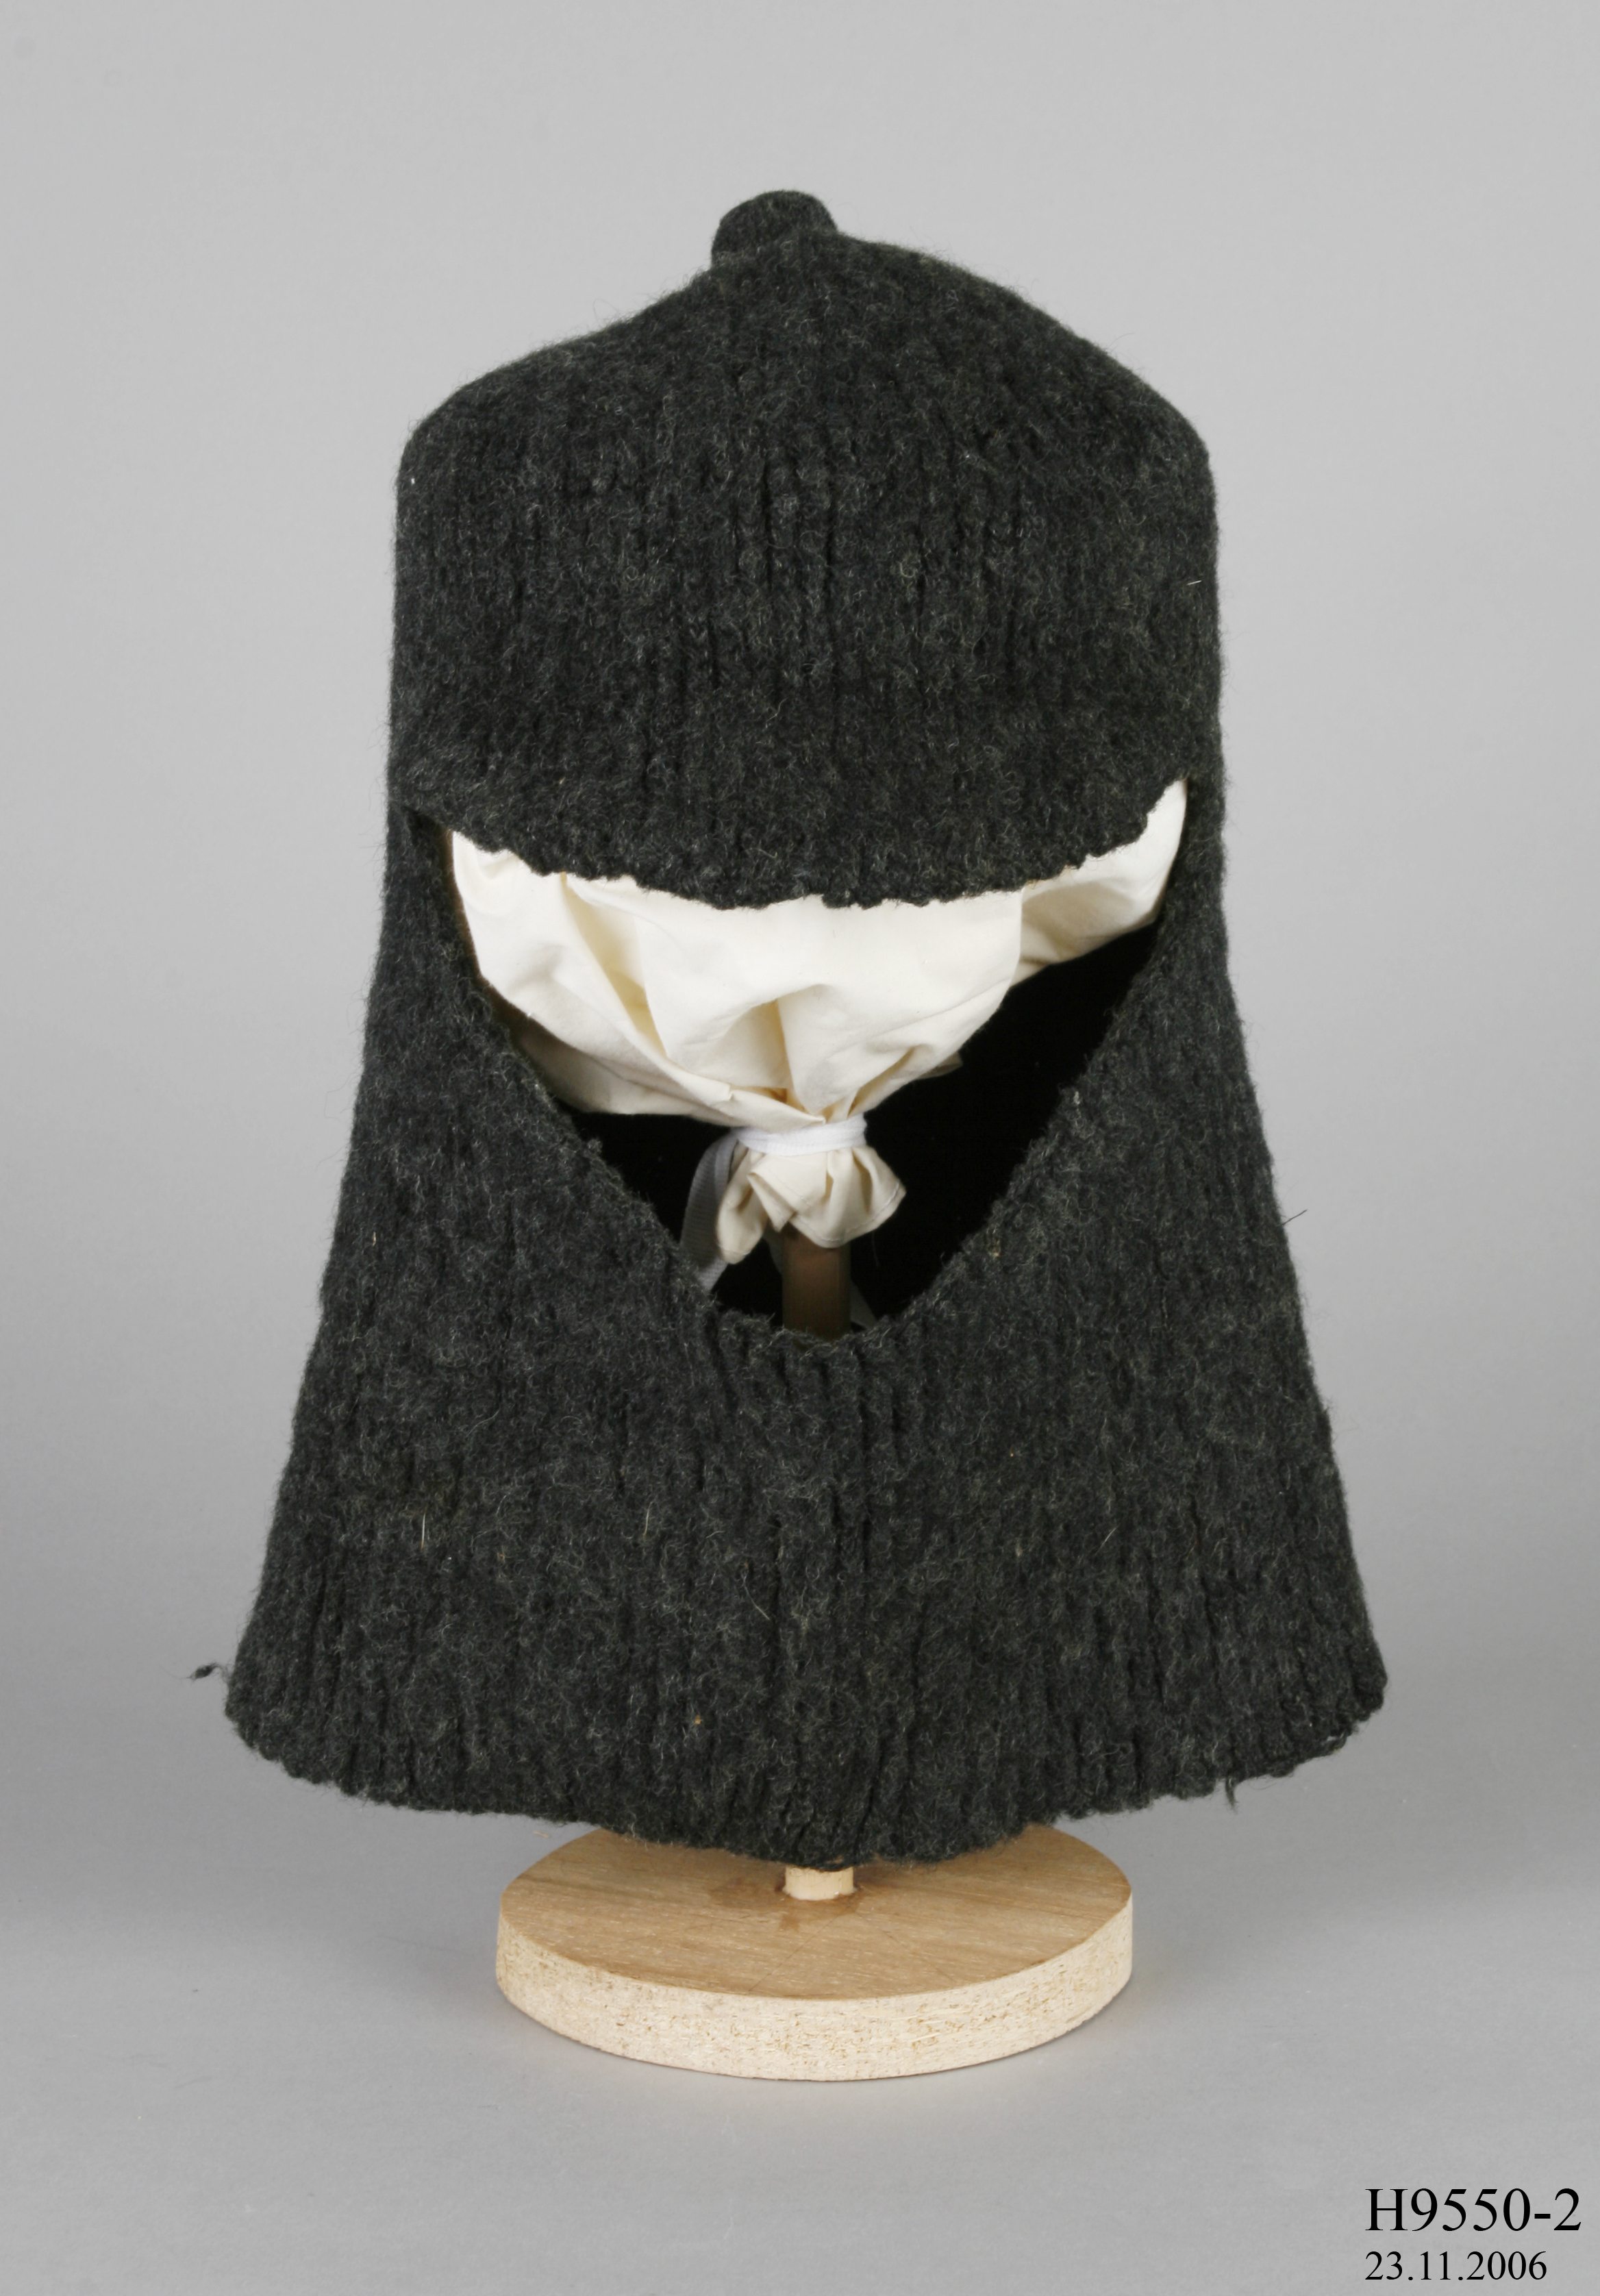 Men's balaclava worn by Morton Henry Moyes